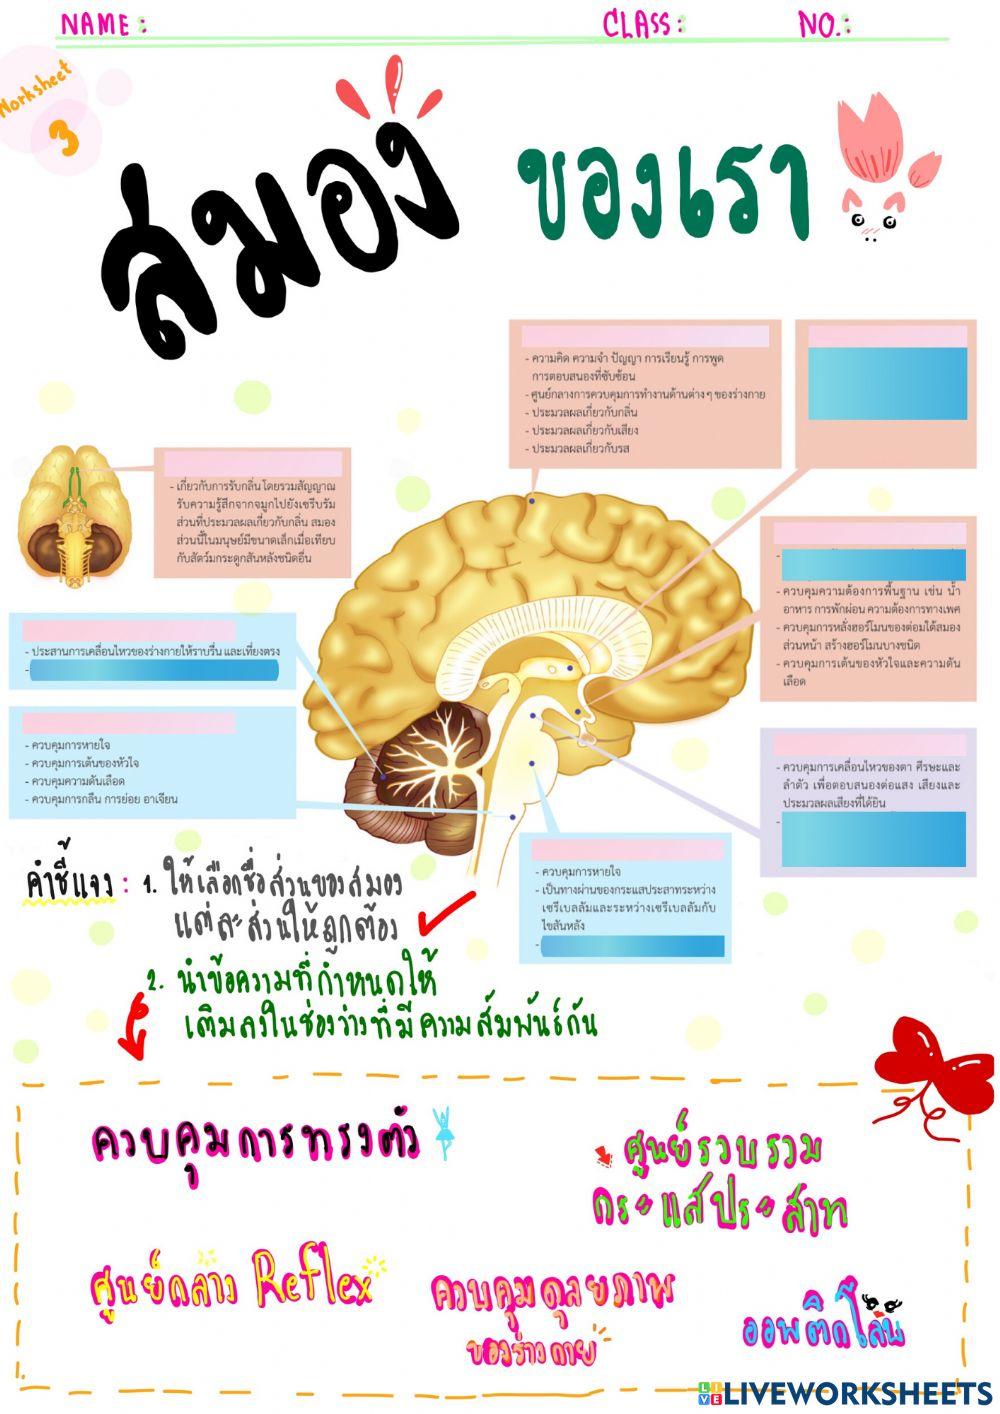 Brain 6-1